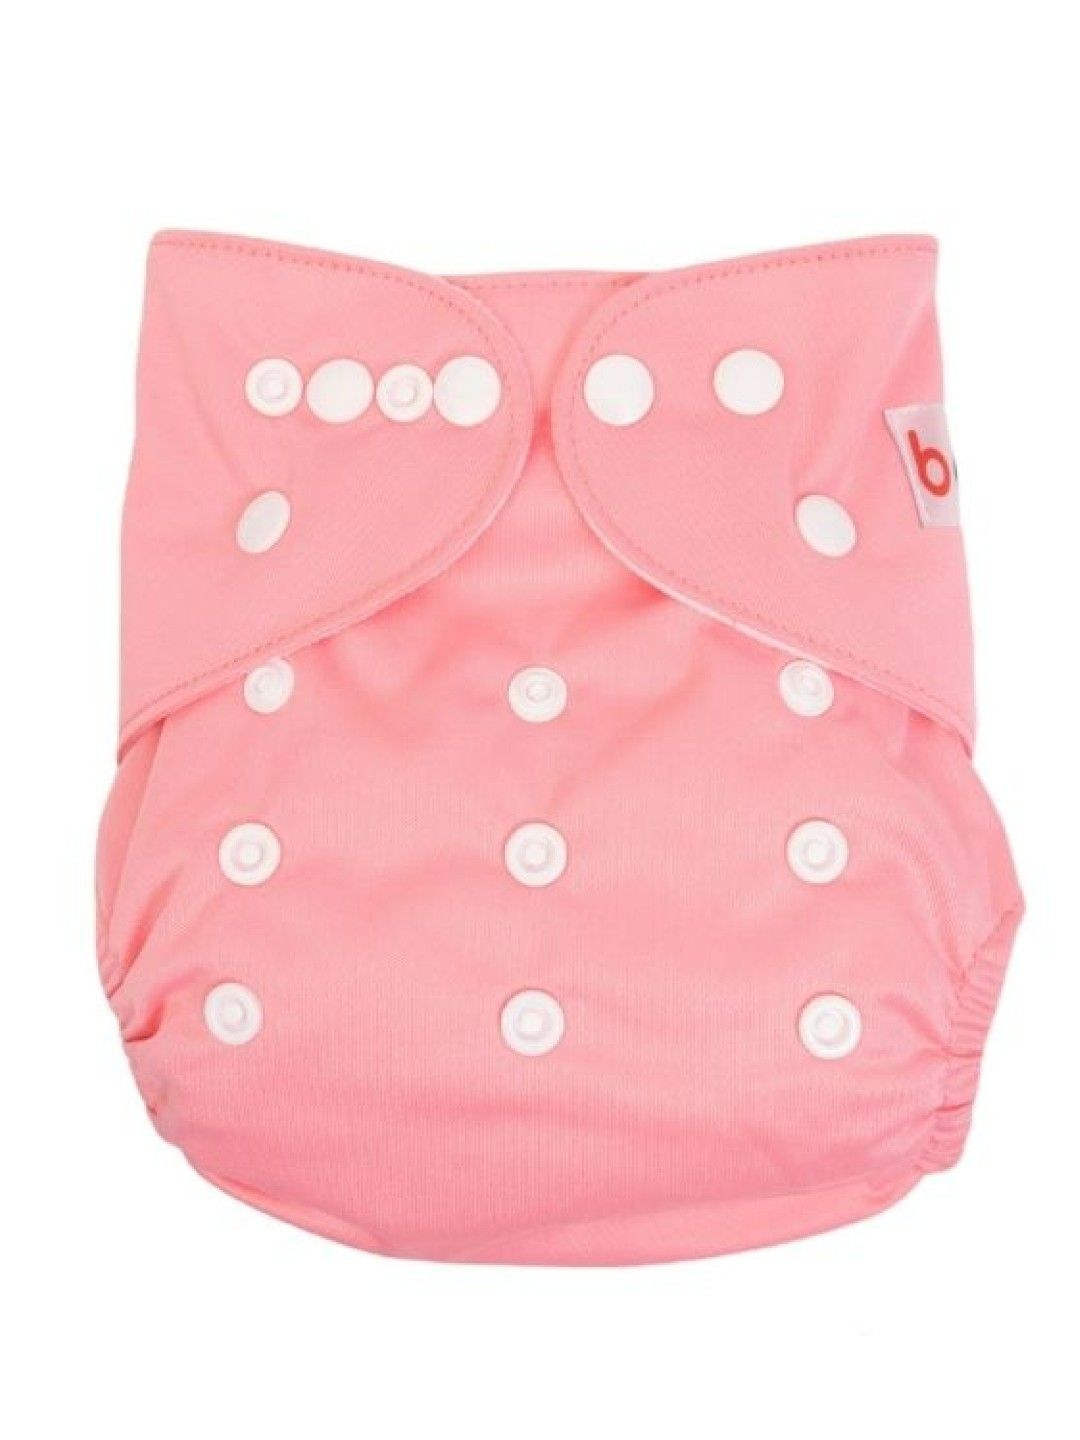 bean fashion Snappies Plain Pink Gear Cloth Diaper (No Color- Image 1)